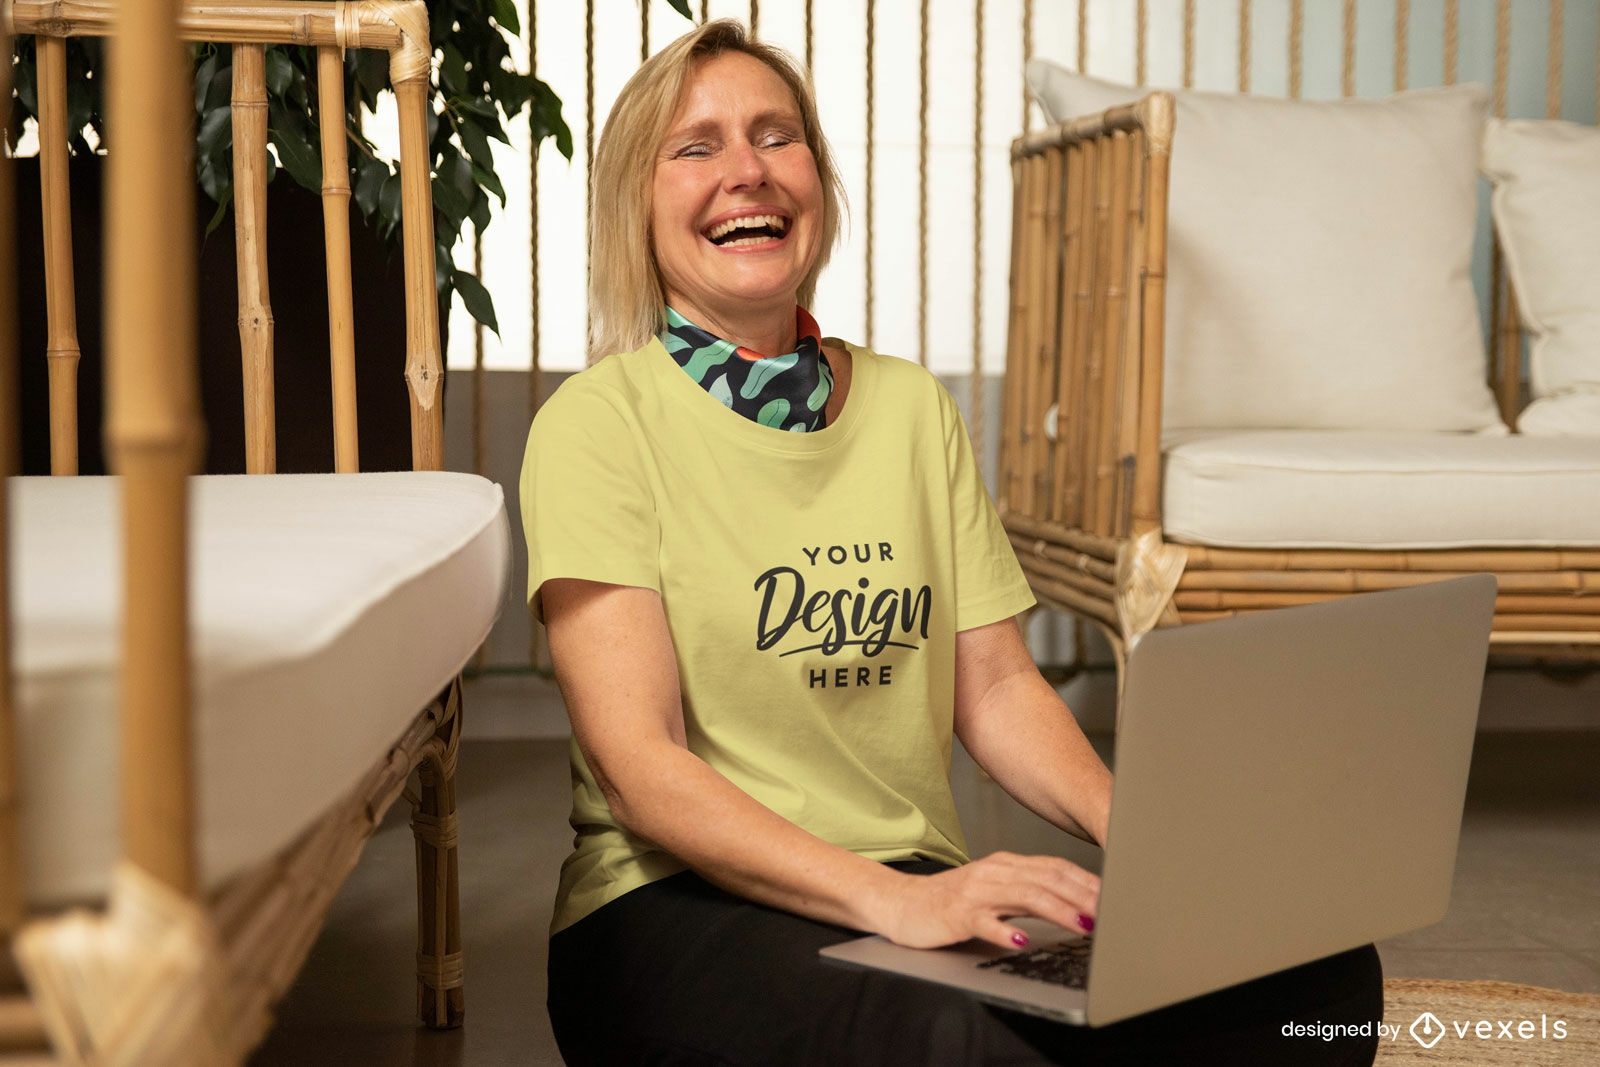 Frau lacht mit Laptop-Gelb-T-Shirt-Modell